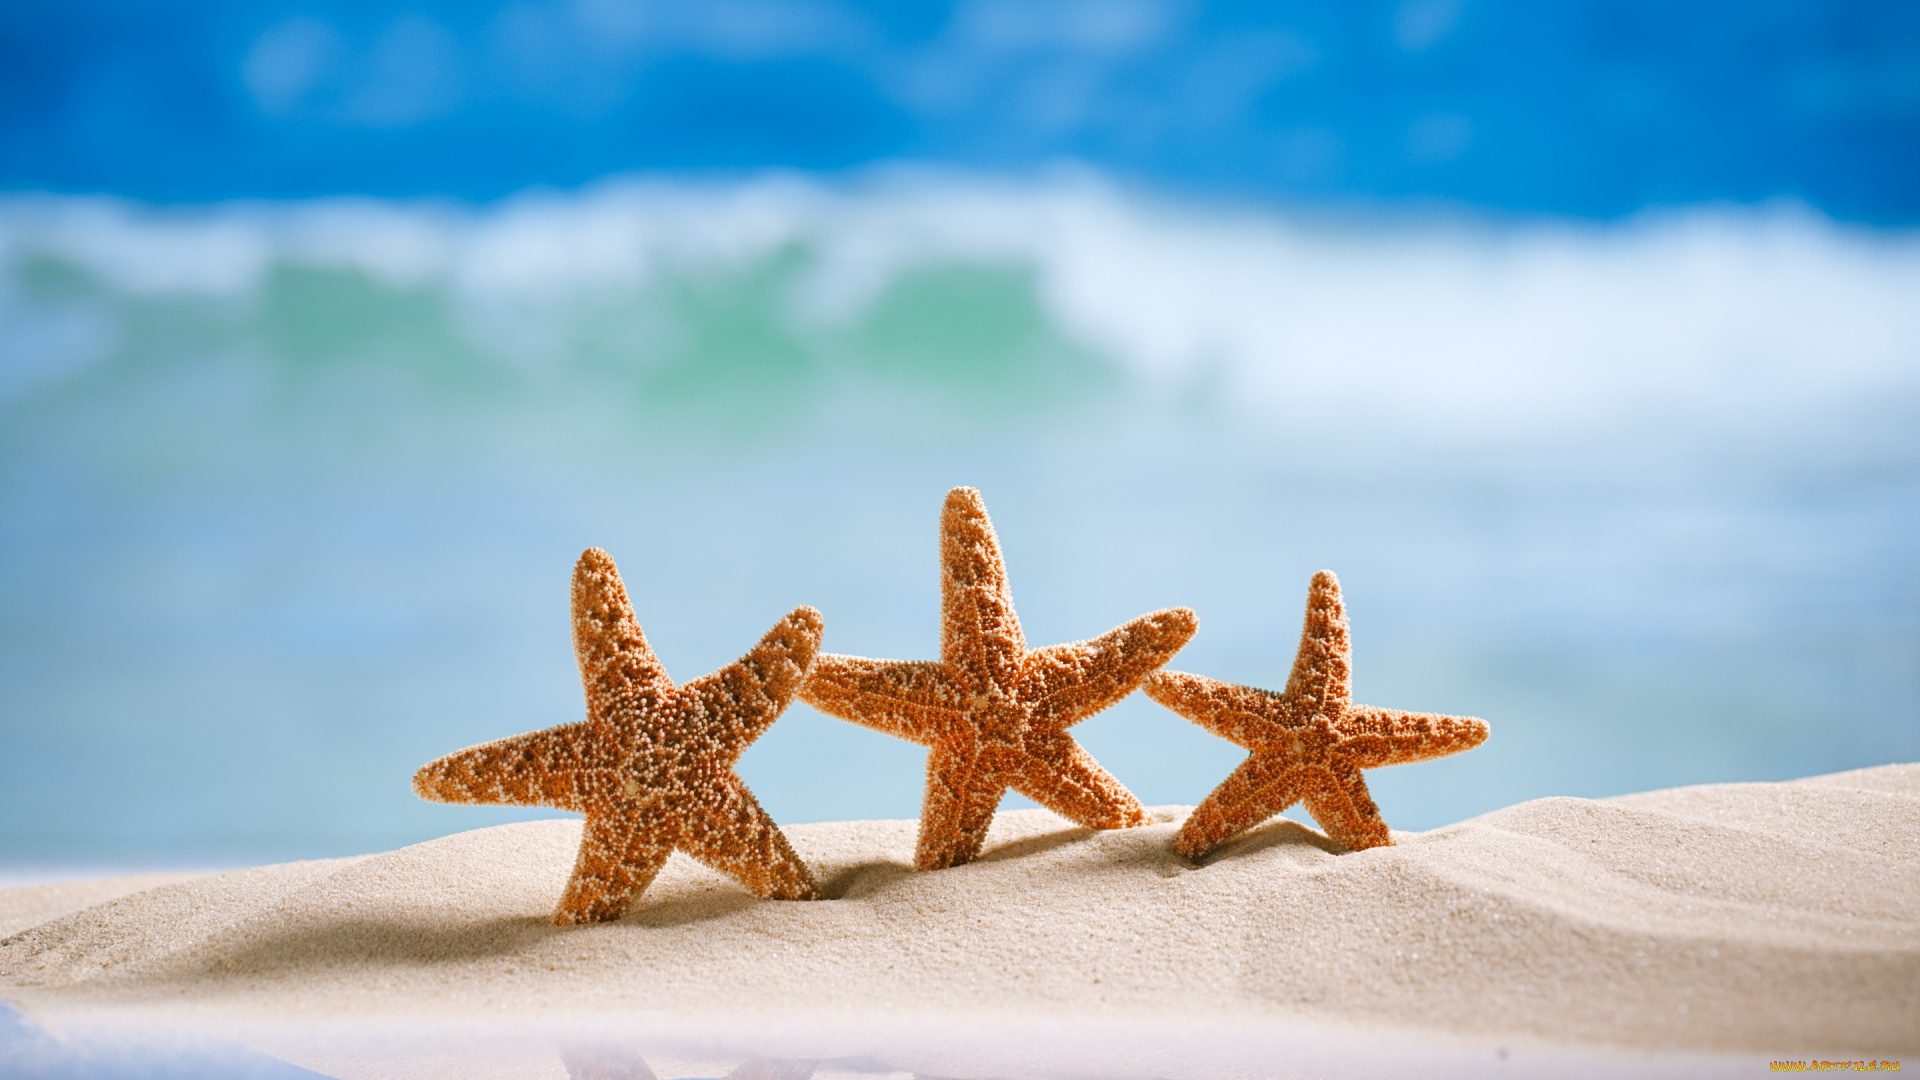 разное, ракушки, , кораллы, , декоративные, и, spa-камни, пляж, summer, песок, морская, звезда, sand, starfishes, море, vacation, sea, beach